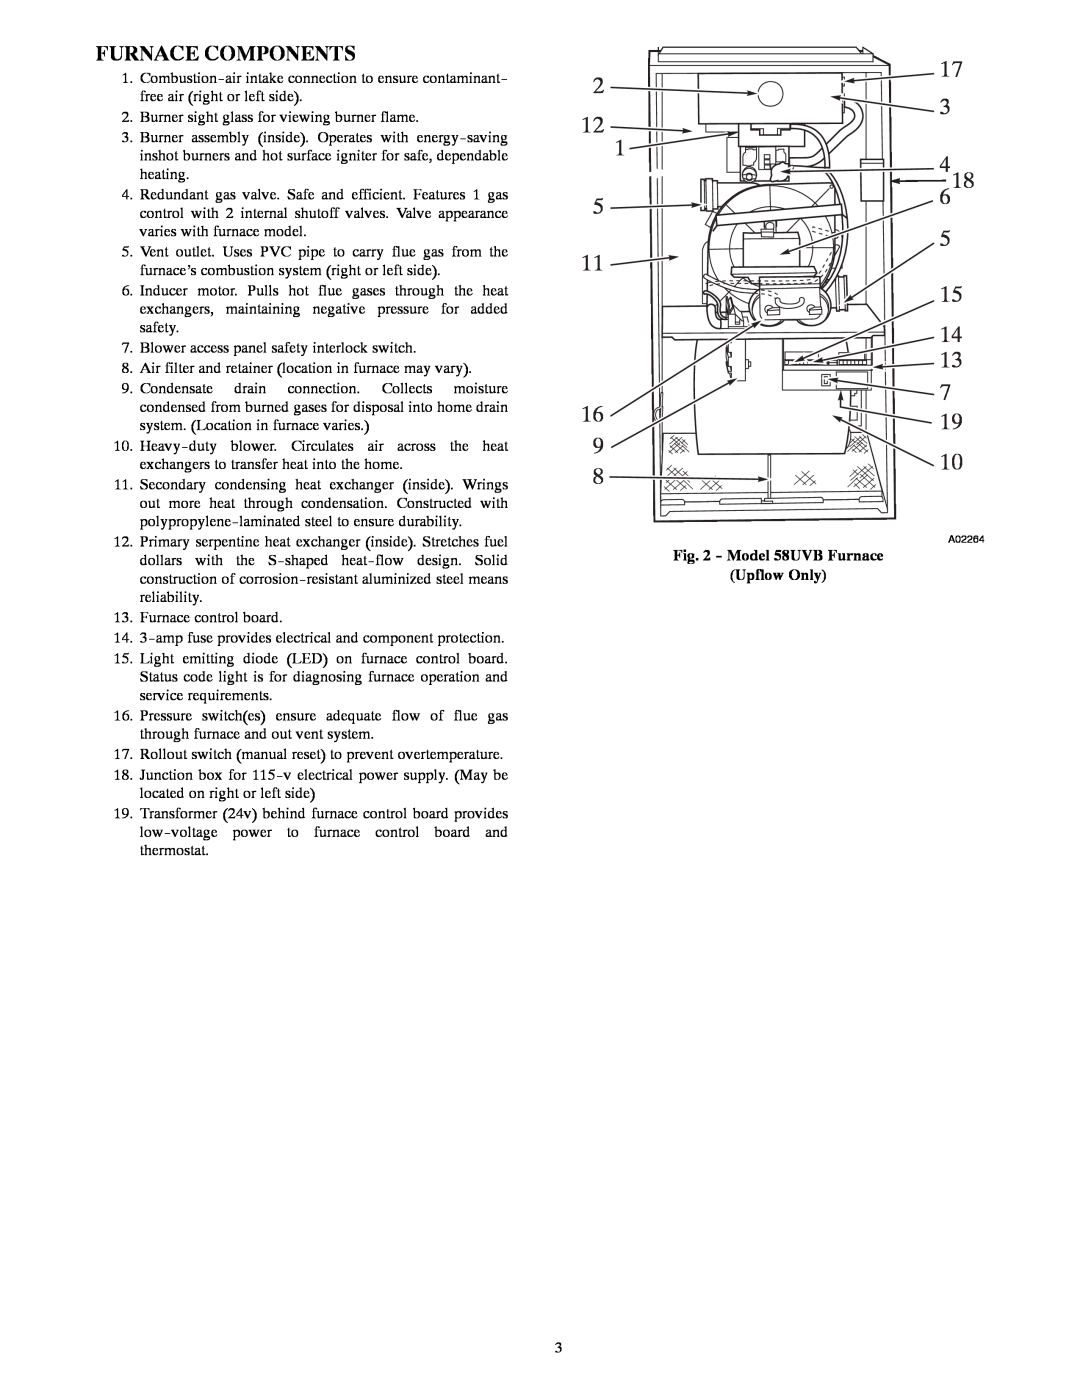 Carrier manual Furnace Components, Model 58UVB Furnace, Upflow Only 